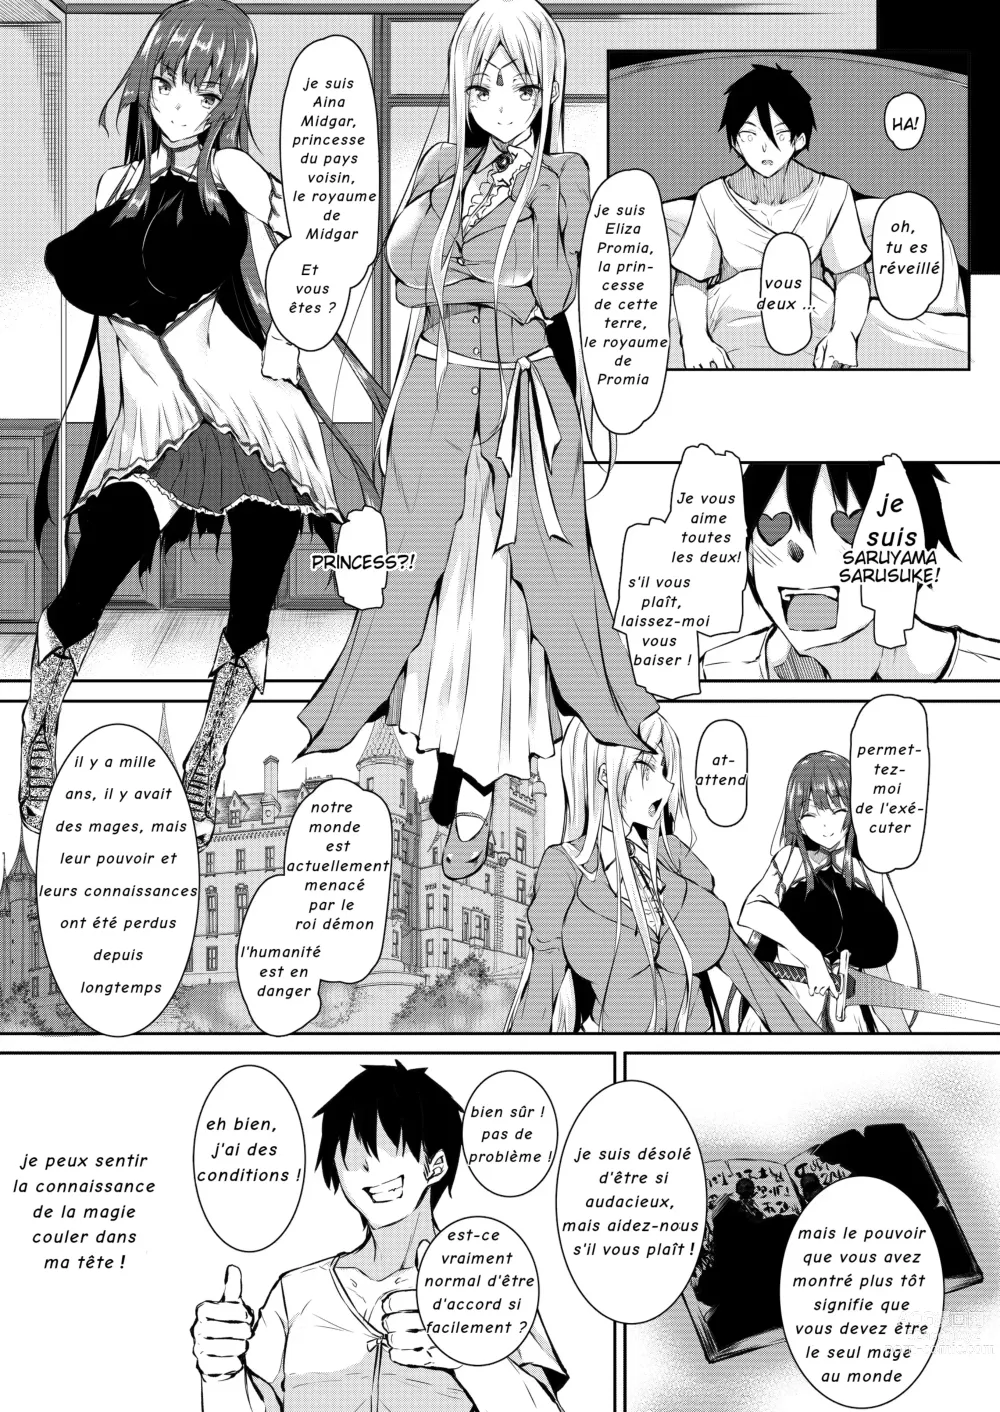 Page 5 of doujinshi Ore Isekai de Mahoutsukai ni Naru